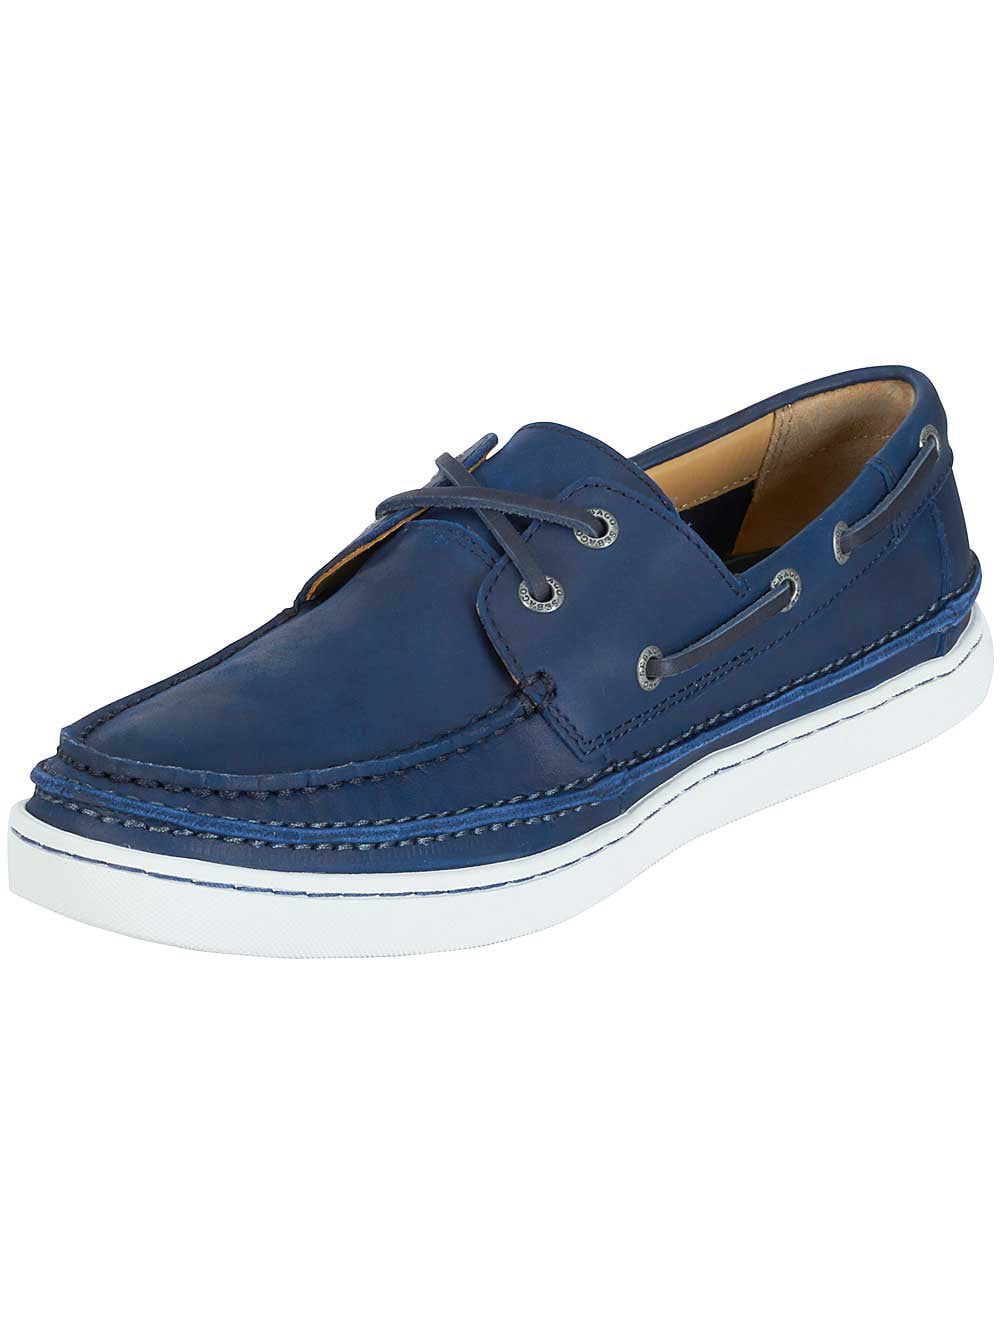 Sebago - Sebago Mens Ryde Two Eye Boat Shoes in Navy Leather - Walmart.com